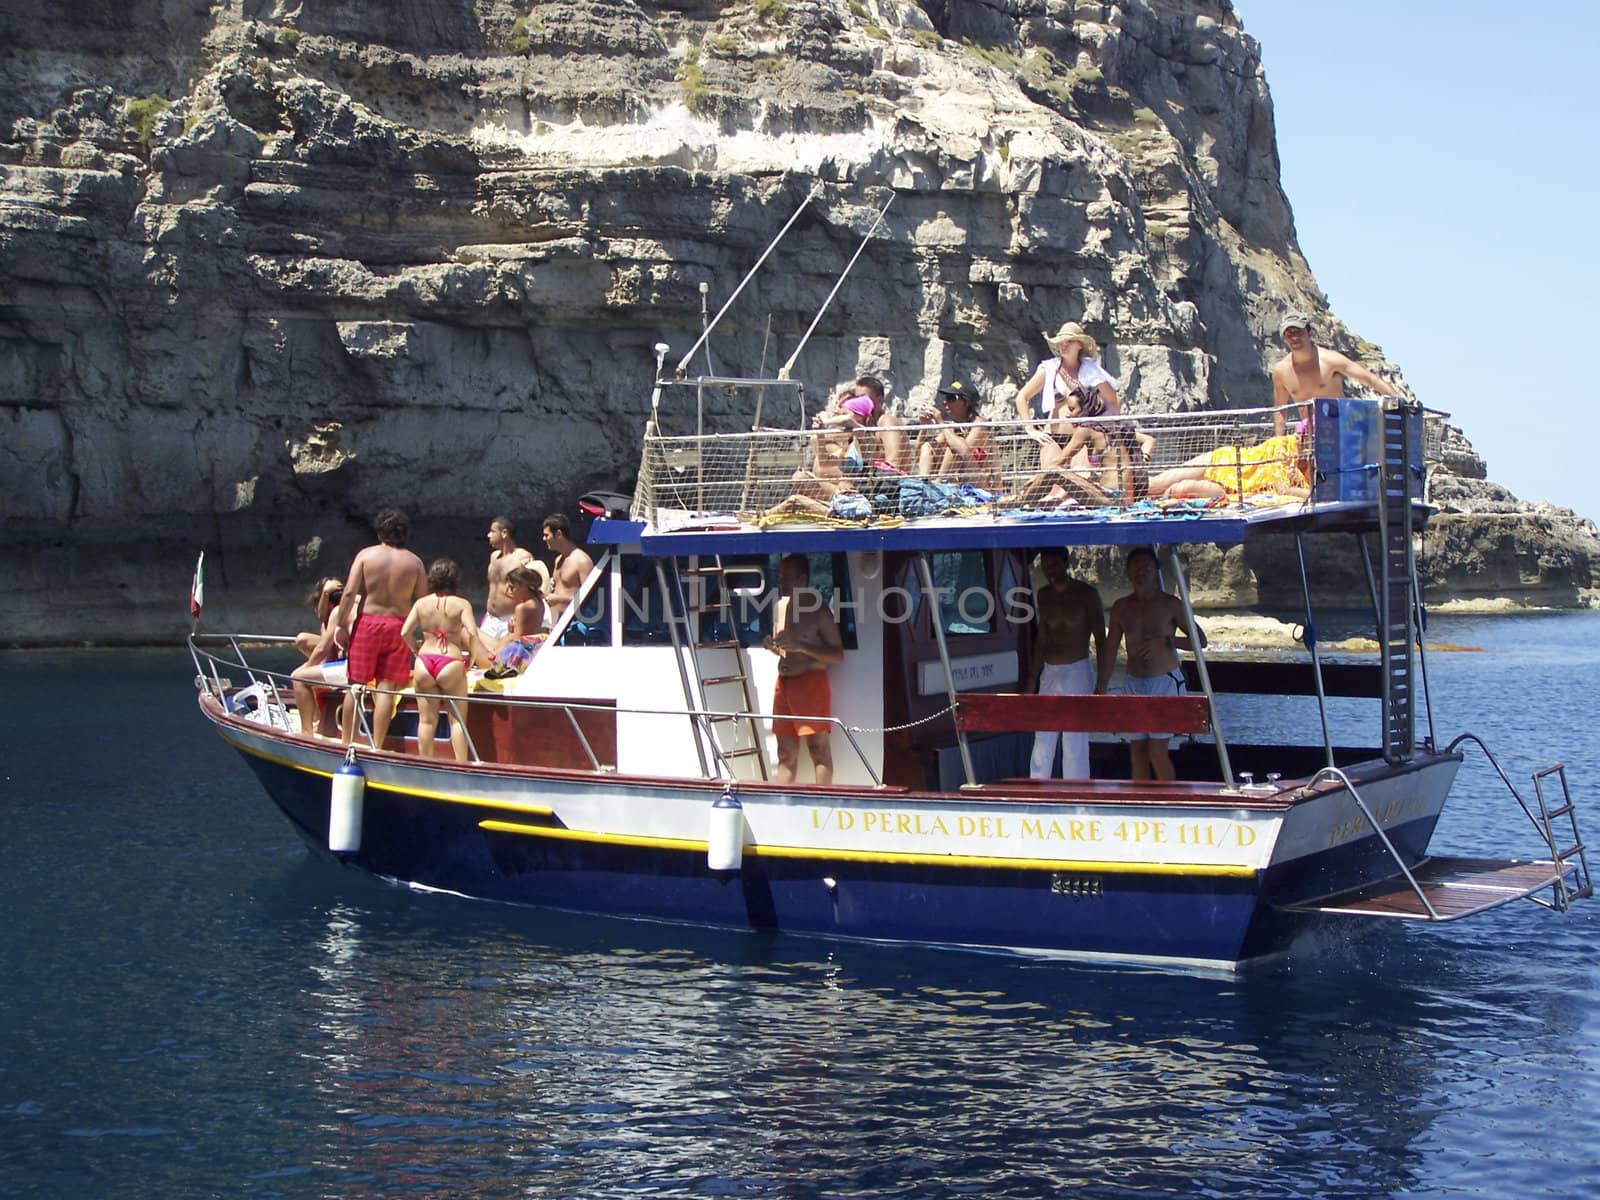 excursion by boat in Lampedusa by gandolfocannatella